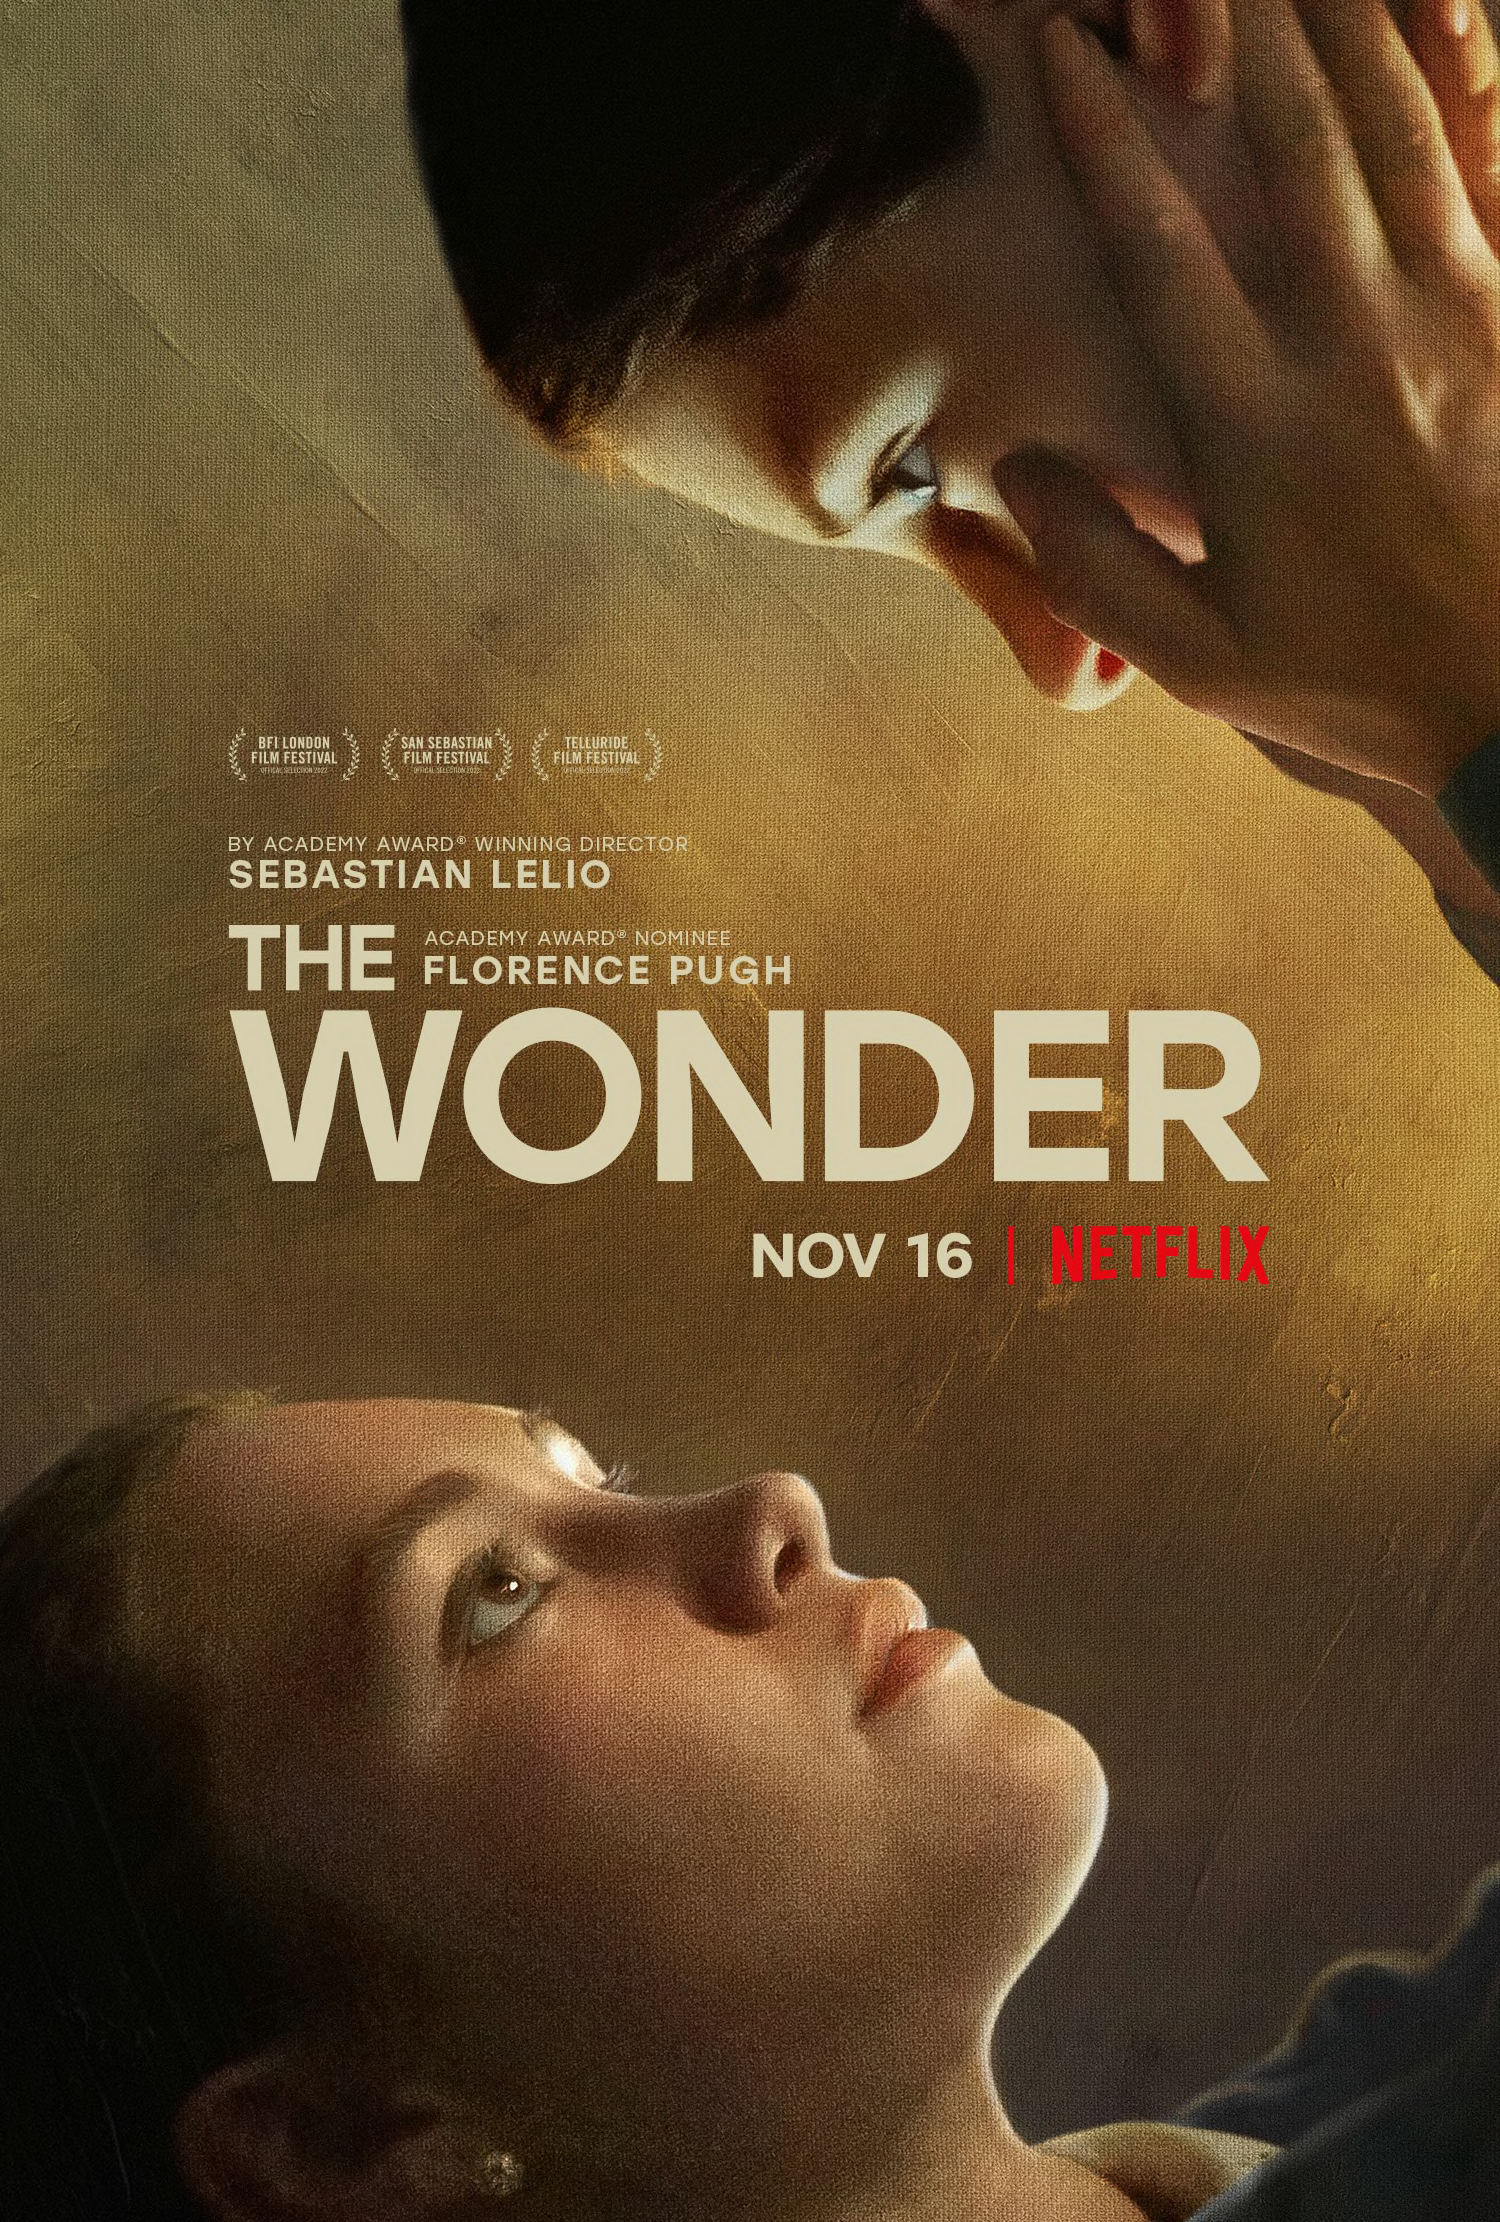 the wonder movie review netflix